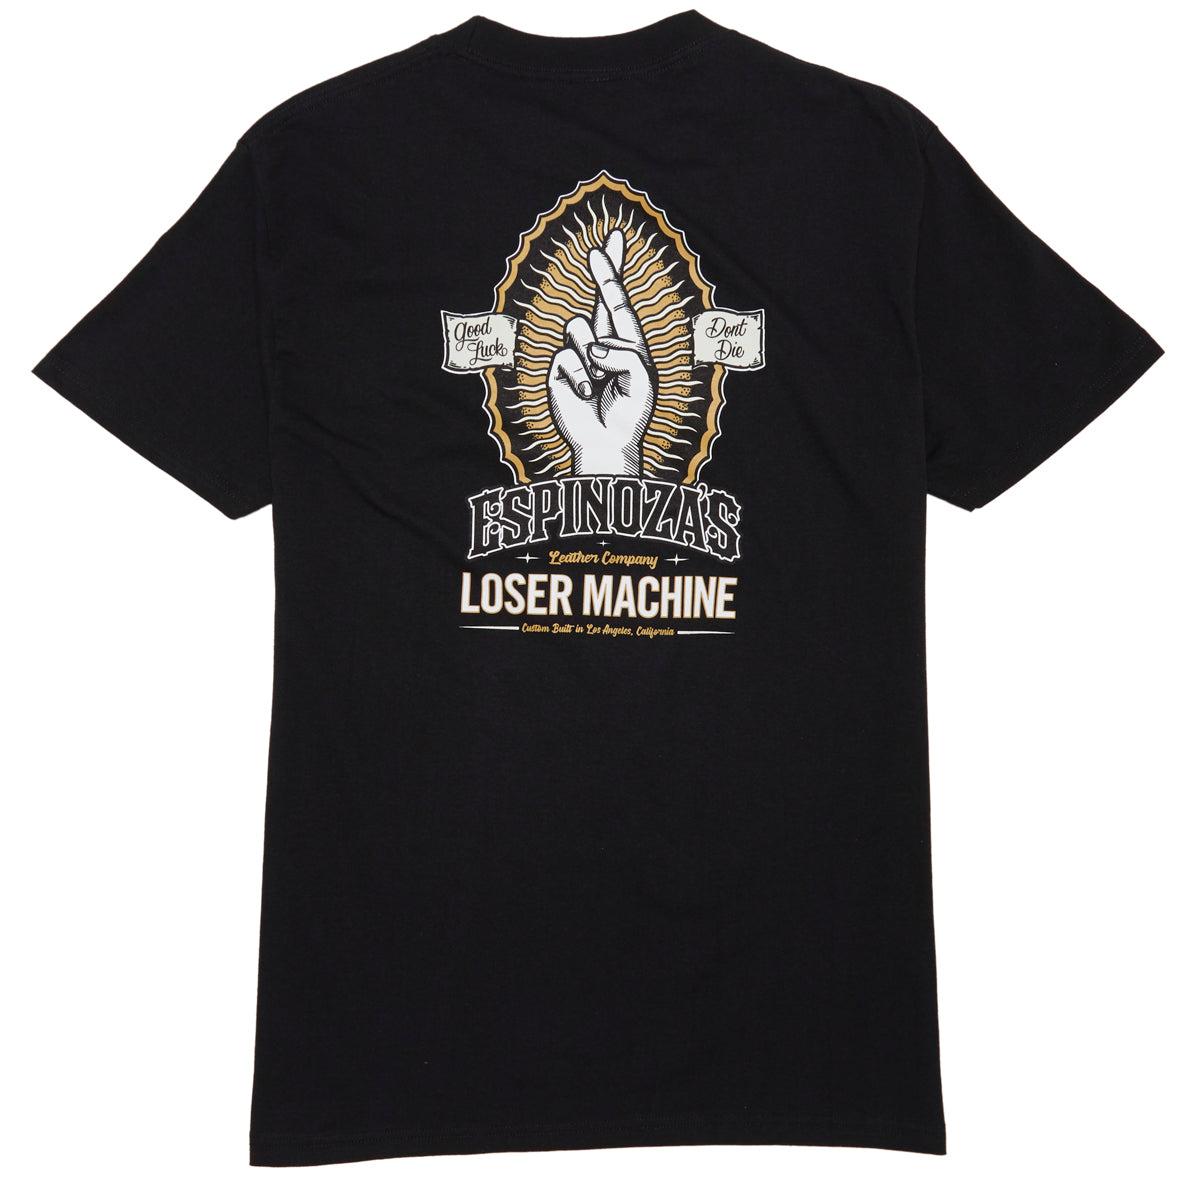 Loser Machine x Espinozas Buena Suerte T-Shirt - Black image 1